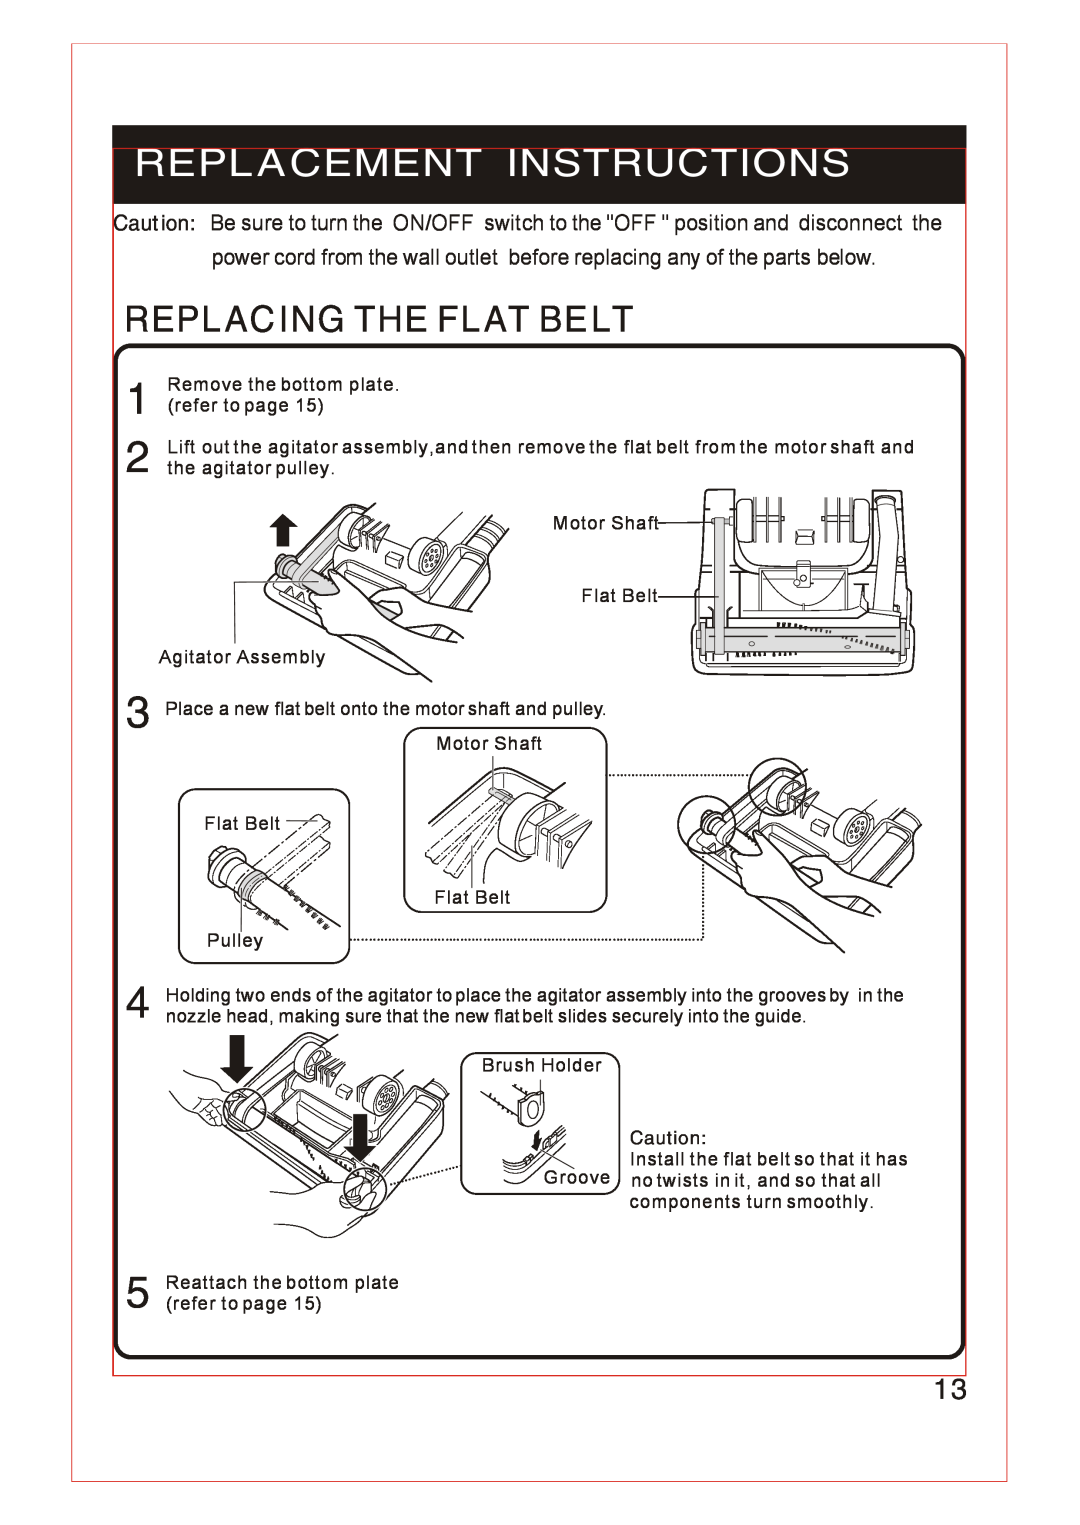 Fantom Vacuum FM740 B instruction manual Replacement Instructions, Replacing The Flat Belt 